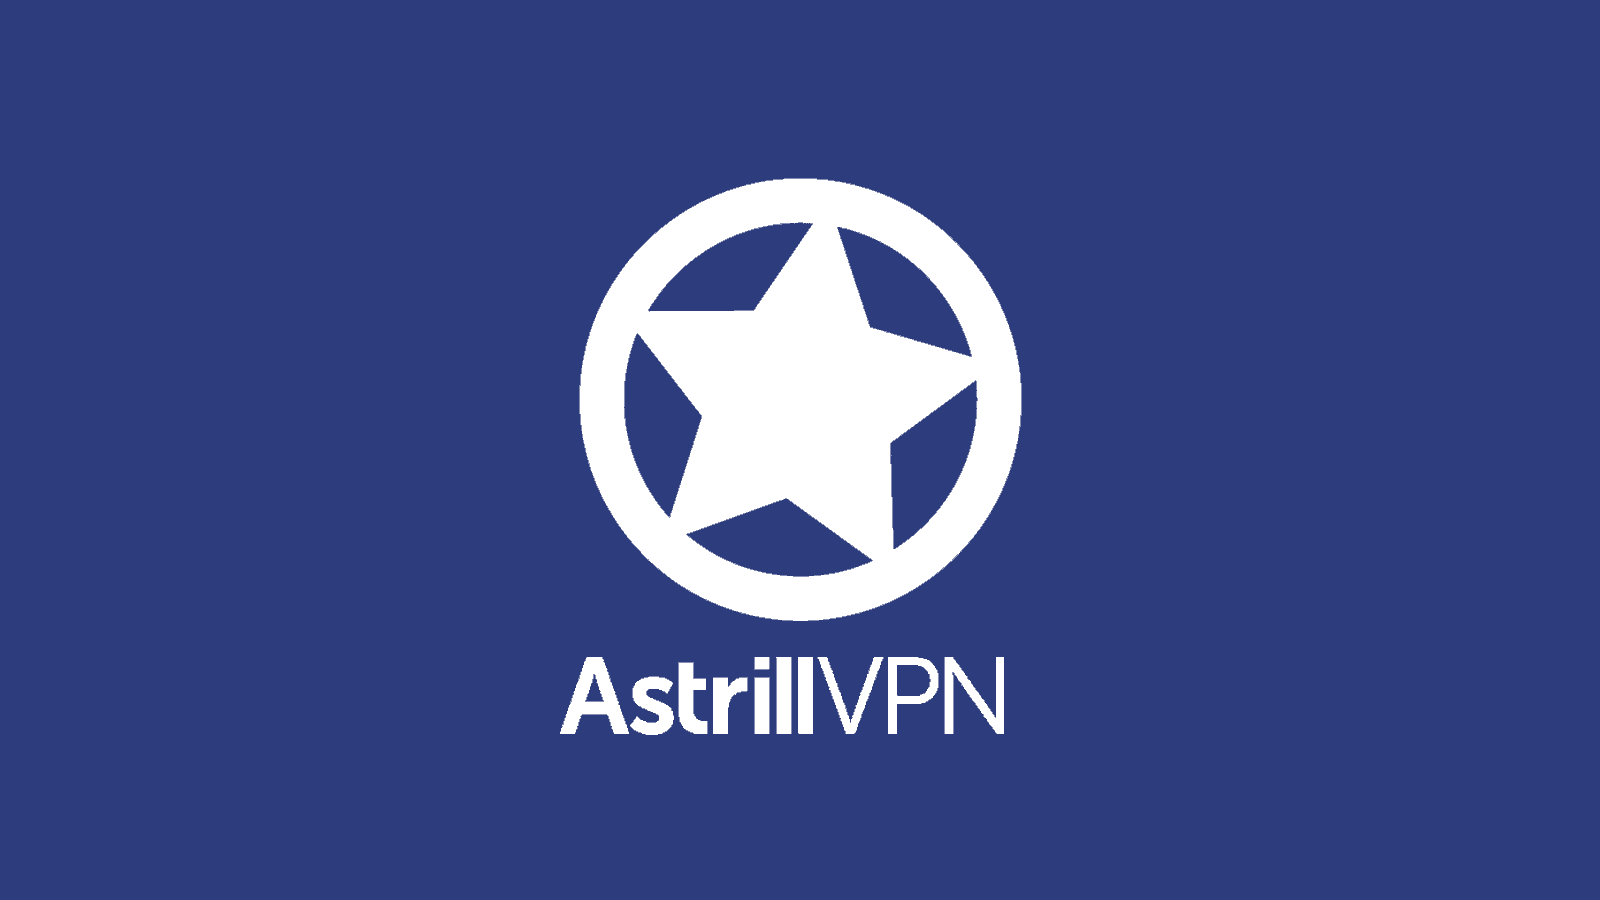 Astrill VPN - Product Logo